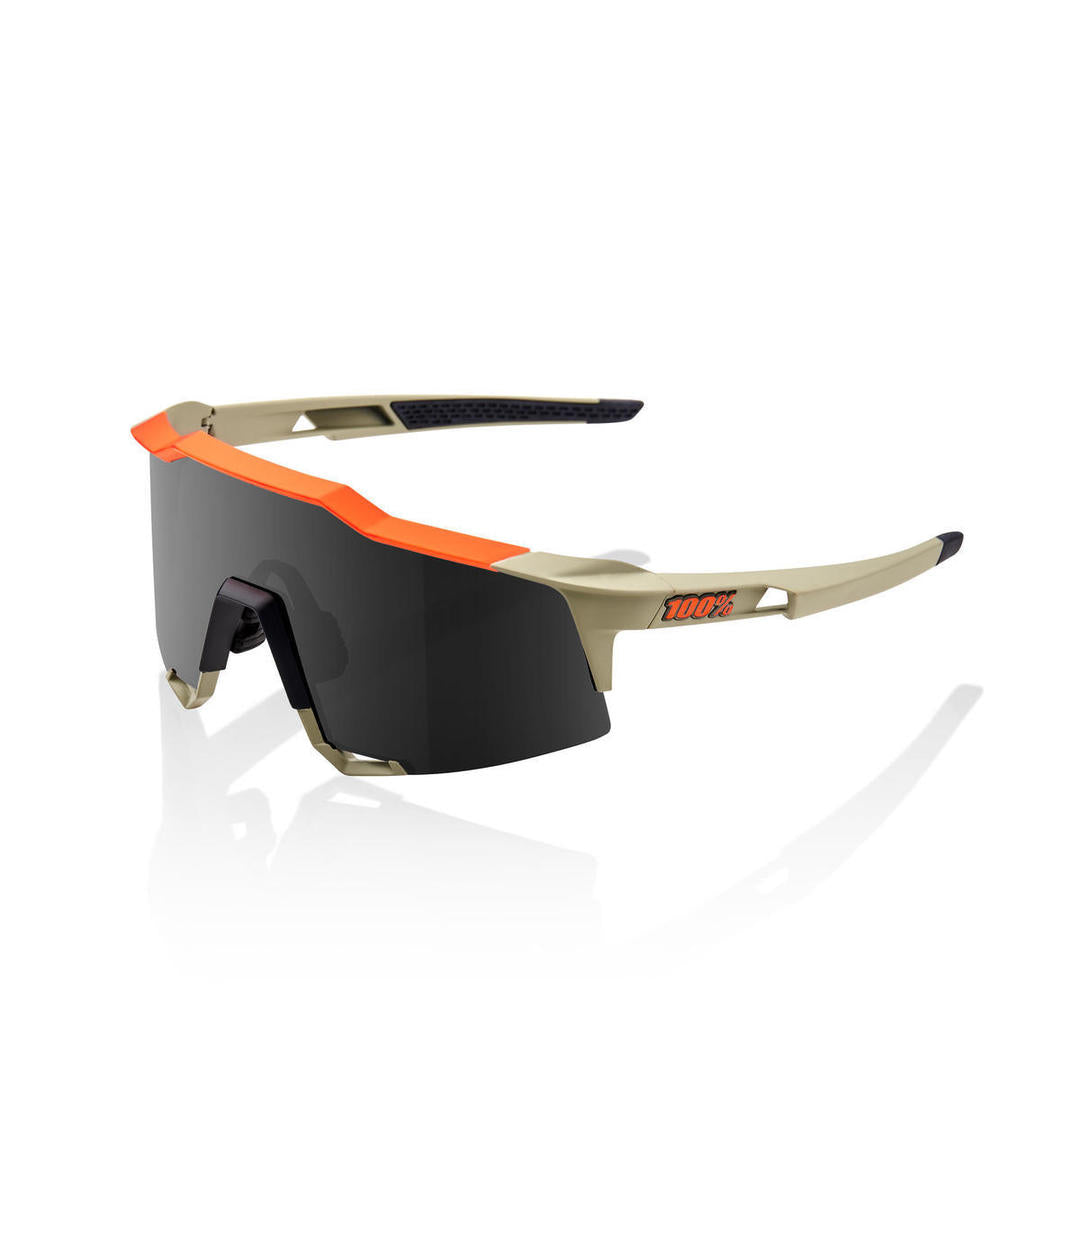 RIDE 100% Gafas de Sol Speedcraft Soft Tact Quicksand - Lente Humo